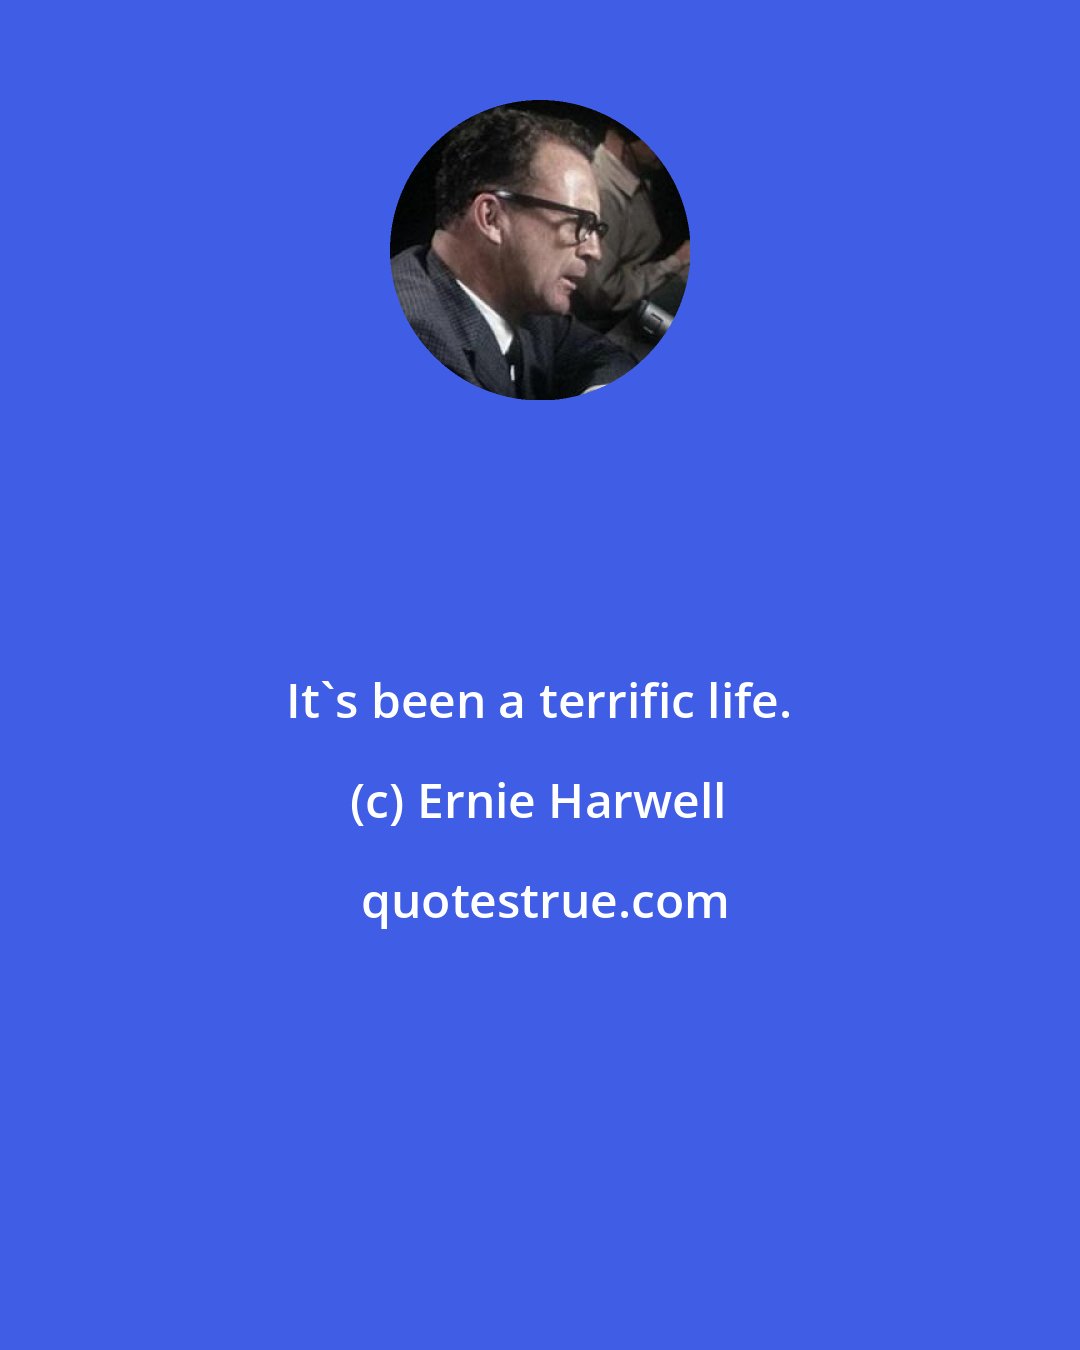 Ernie Harwell: It's been a terrific life.